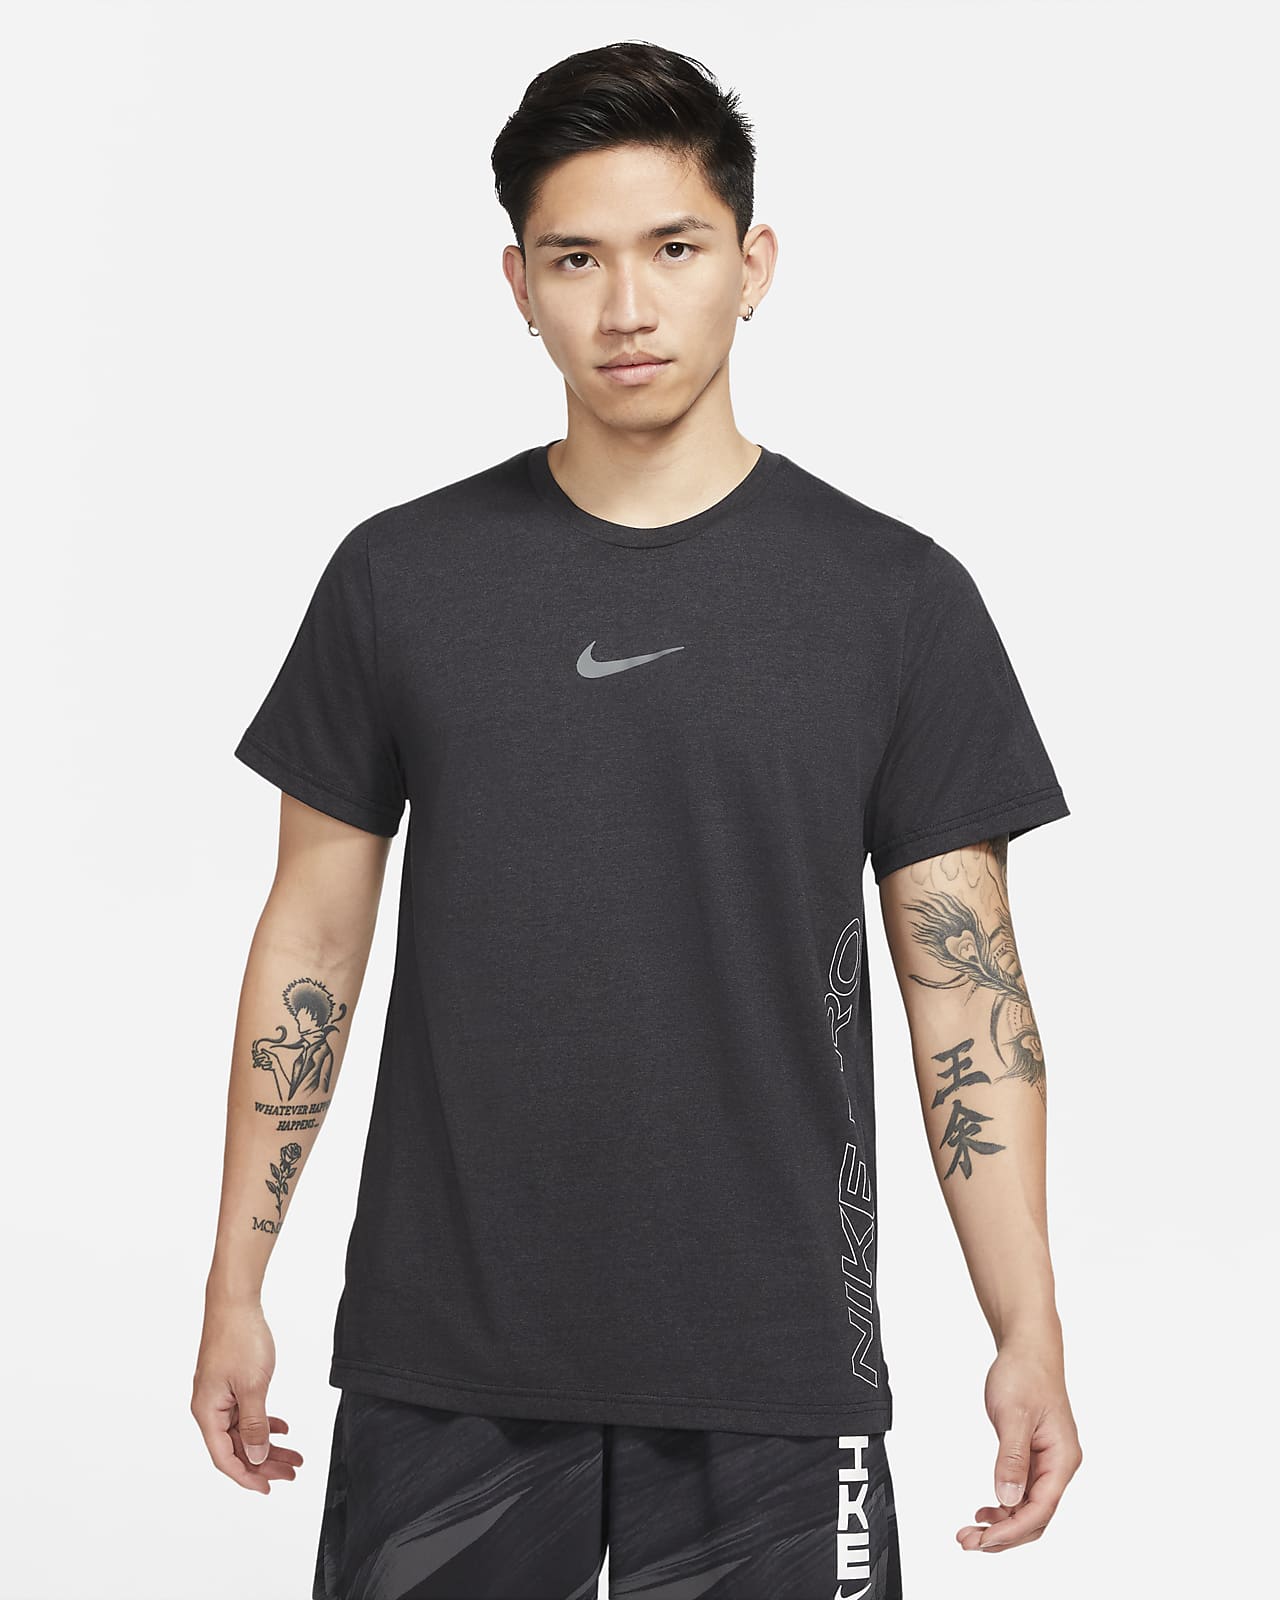 Nike Pro Dri-FIT Burnout Men's Short-Sleeve Top